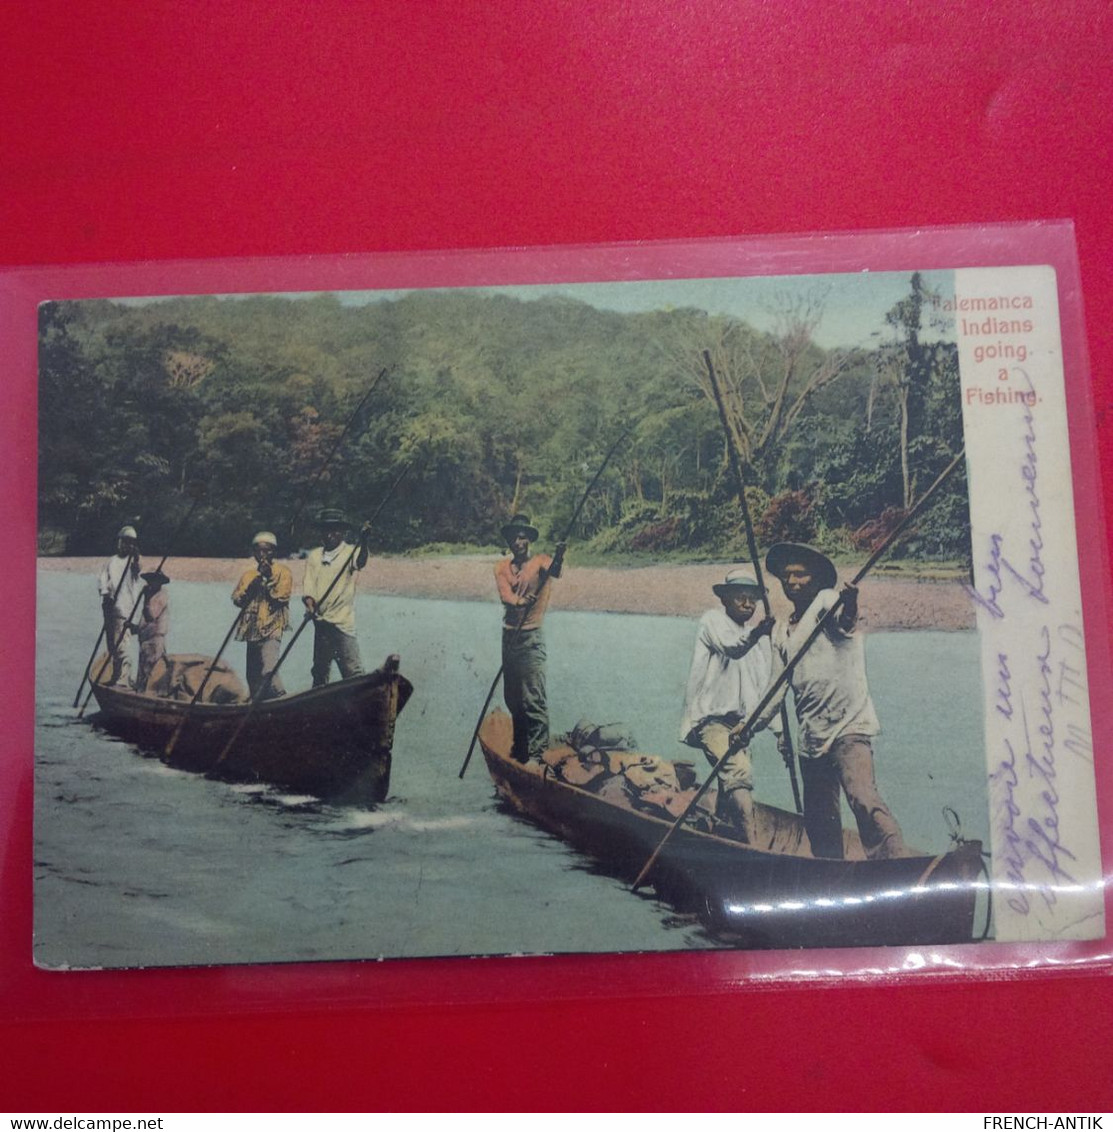 FALEMANCA INDIANS GOING A FISHING - Panama